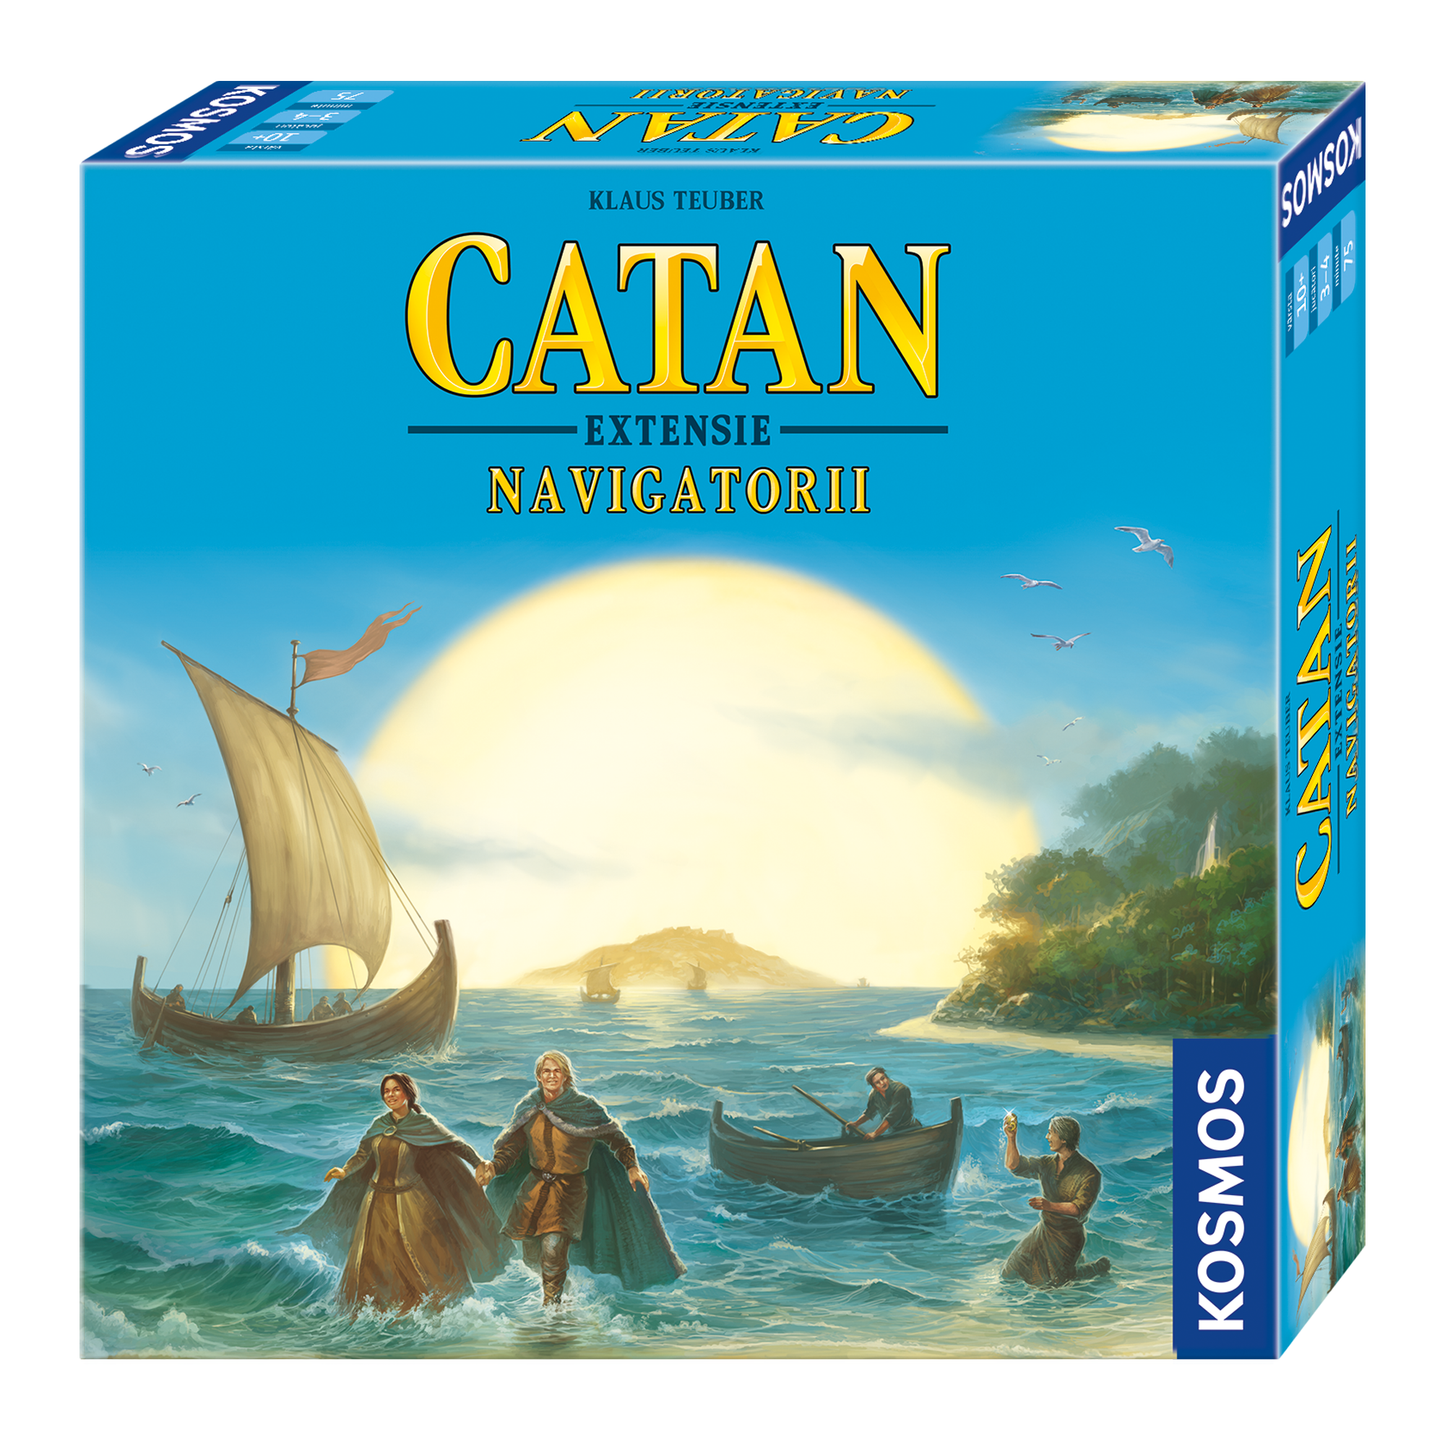 CATAN - Navigatorii (Extensie)